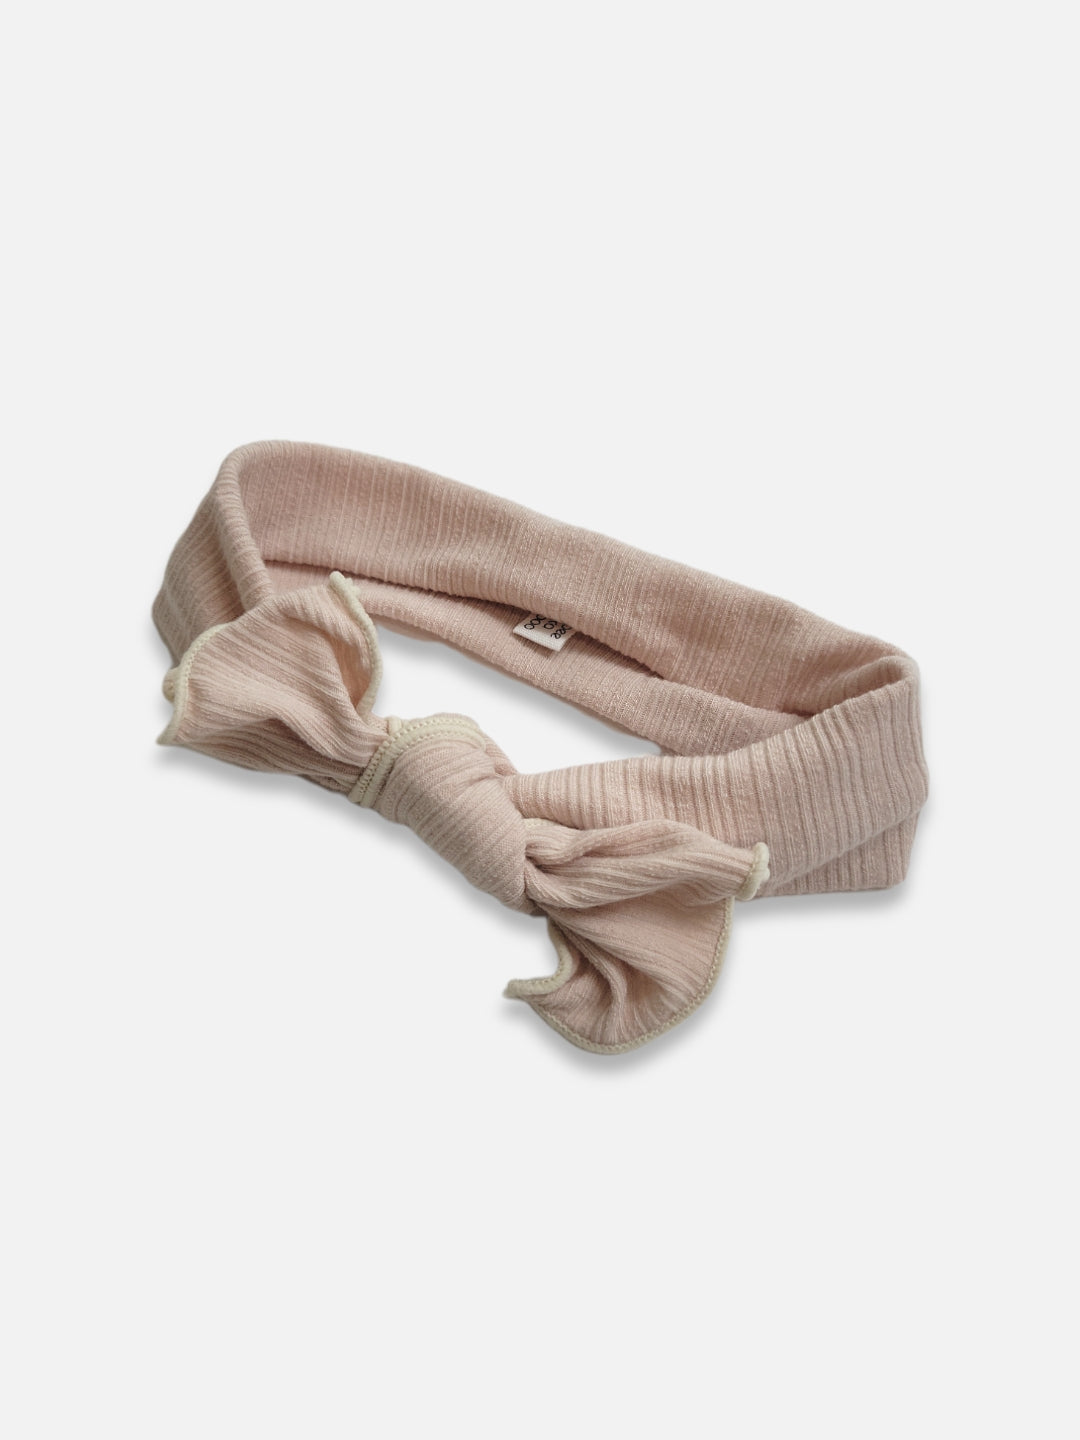 Crepe Knot Headband │ Pale Pink